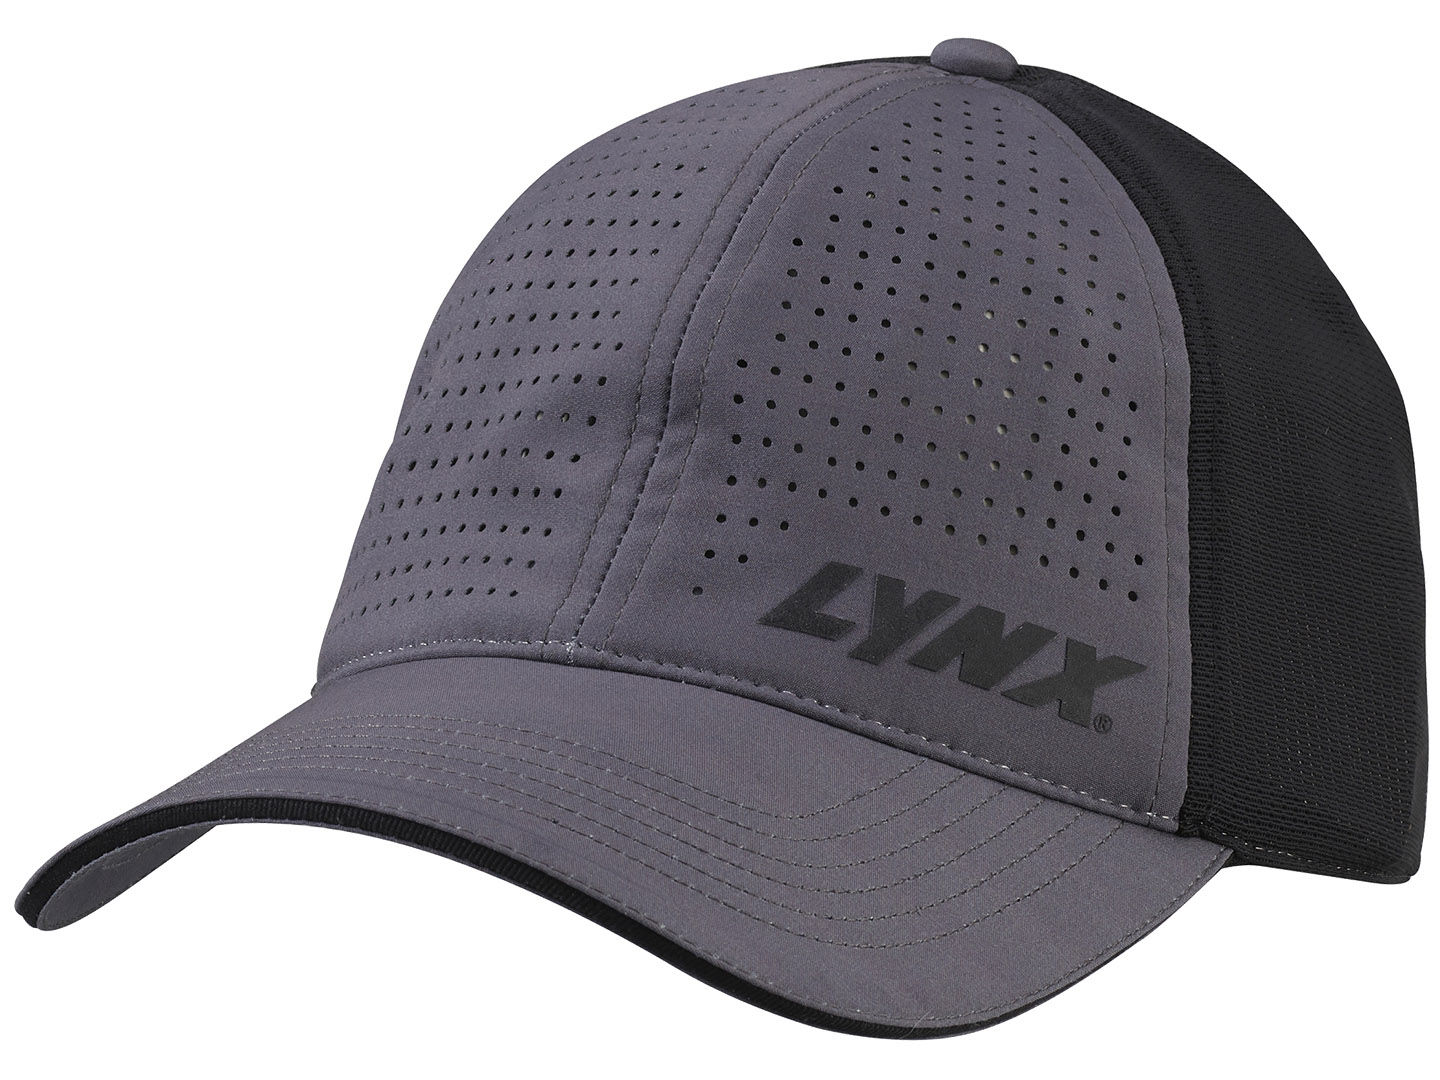 Grey and black Lynx Active Cap